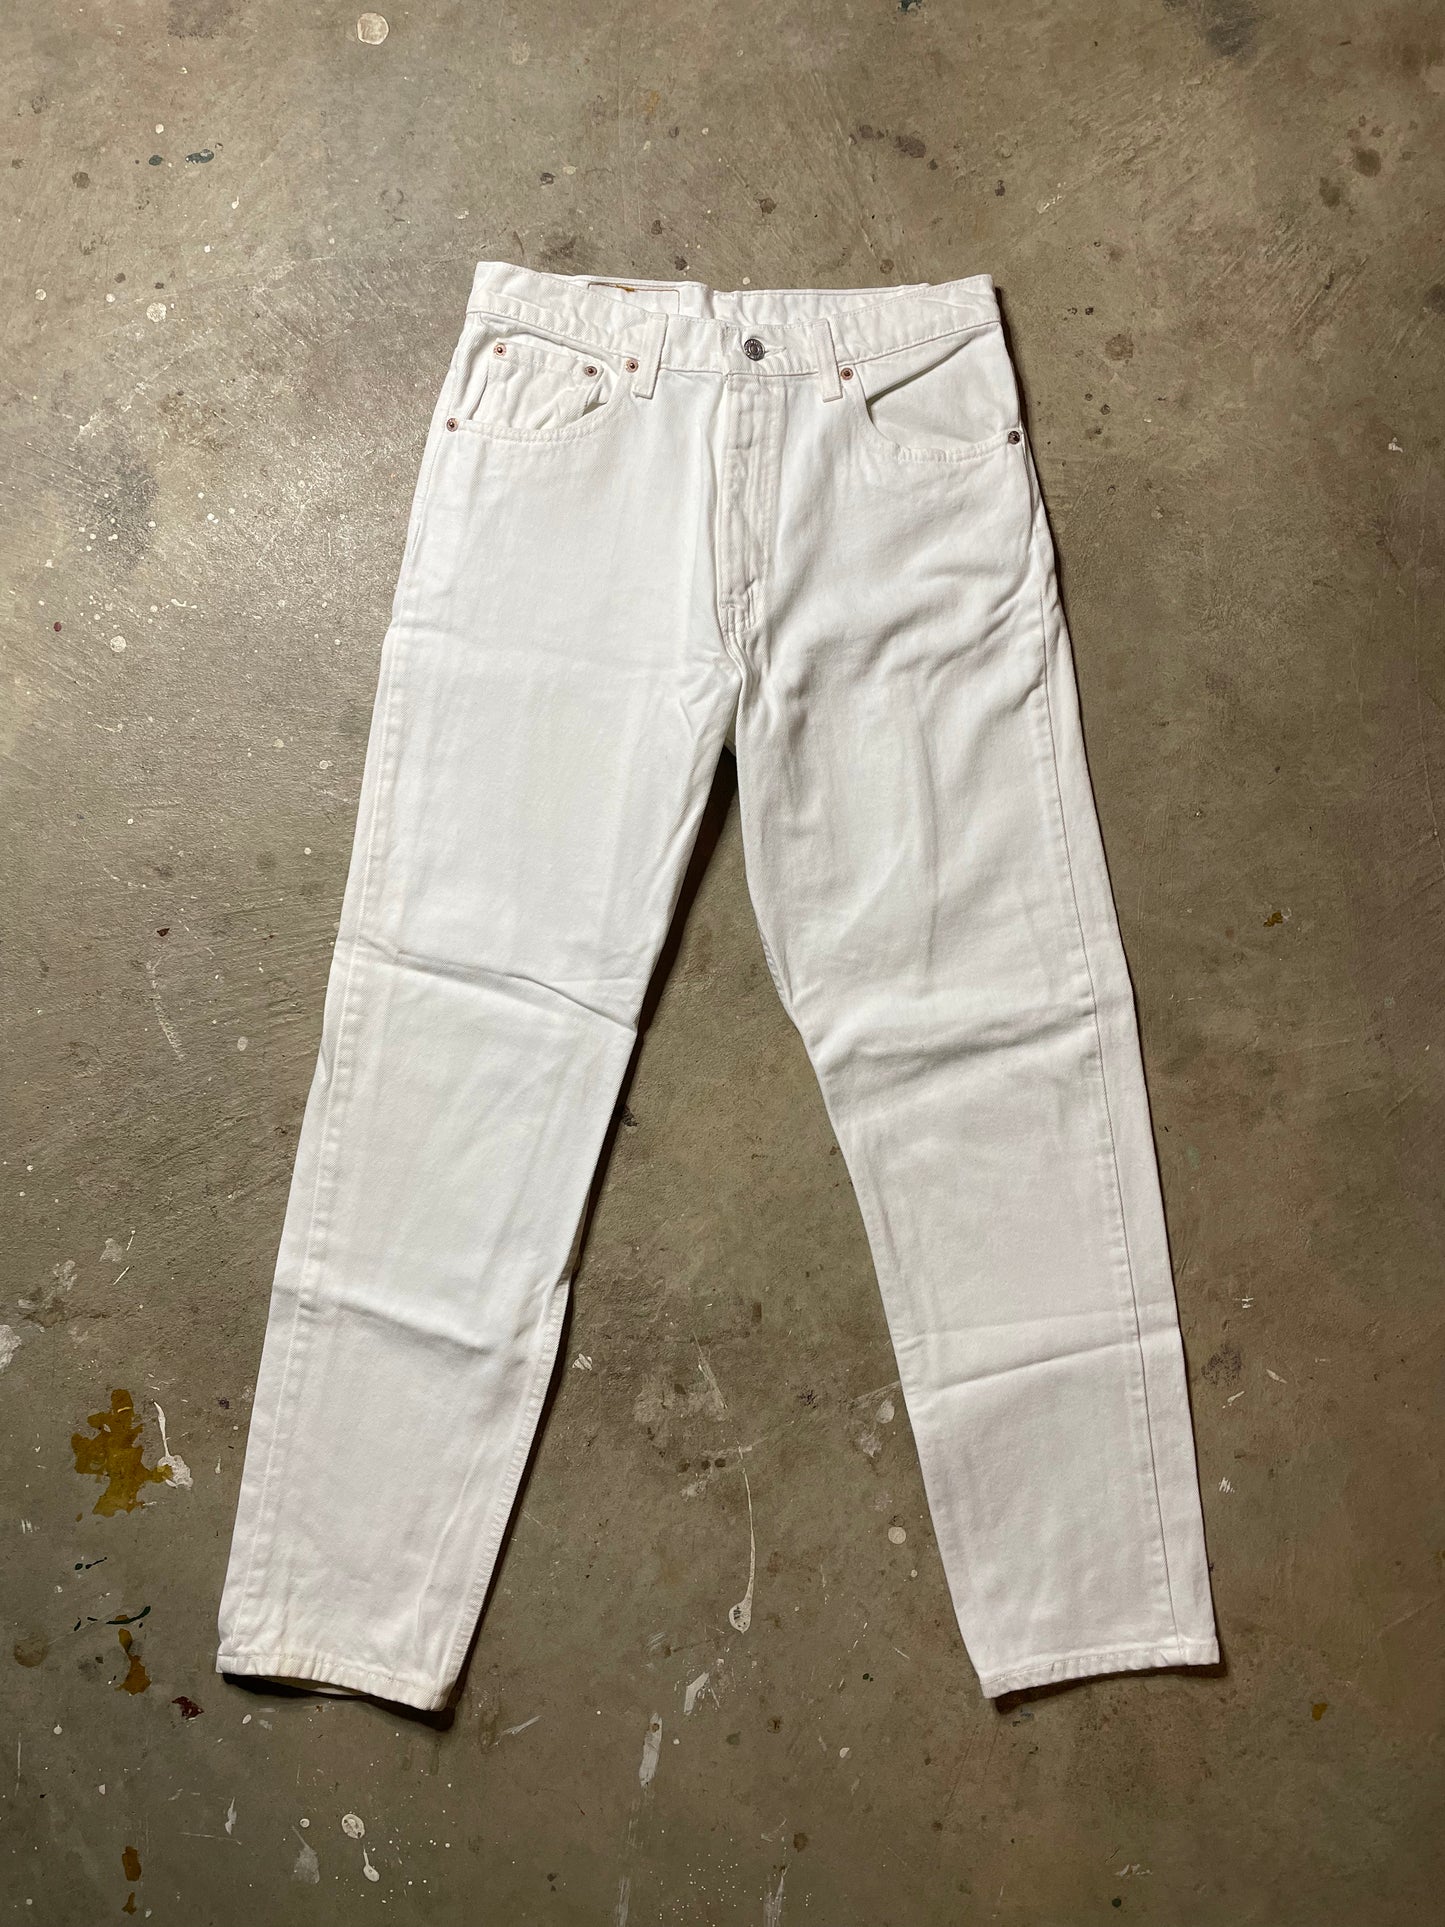 1990s Levi’s 550 Denim Jeans